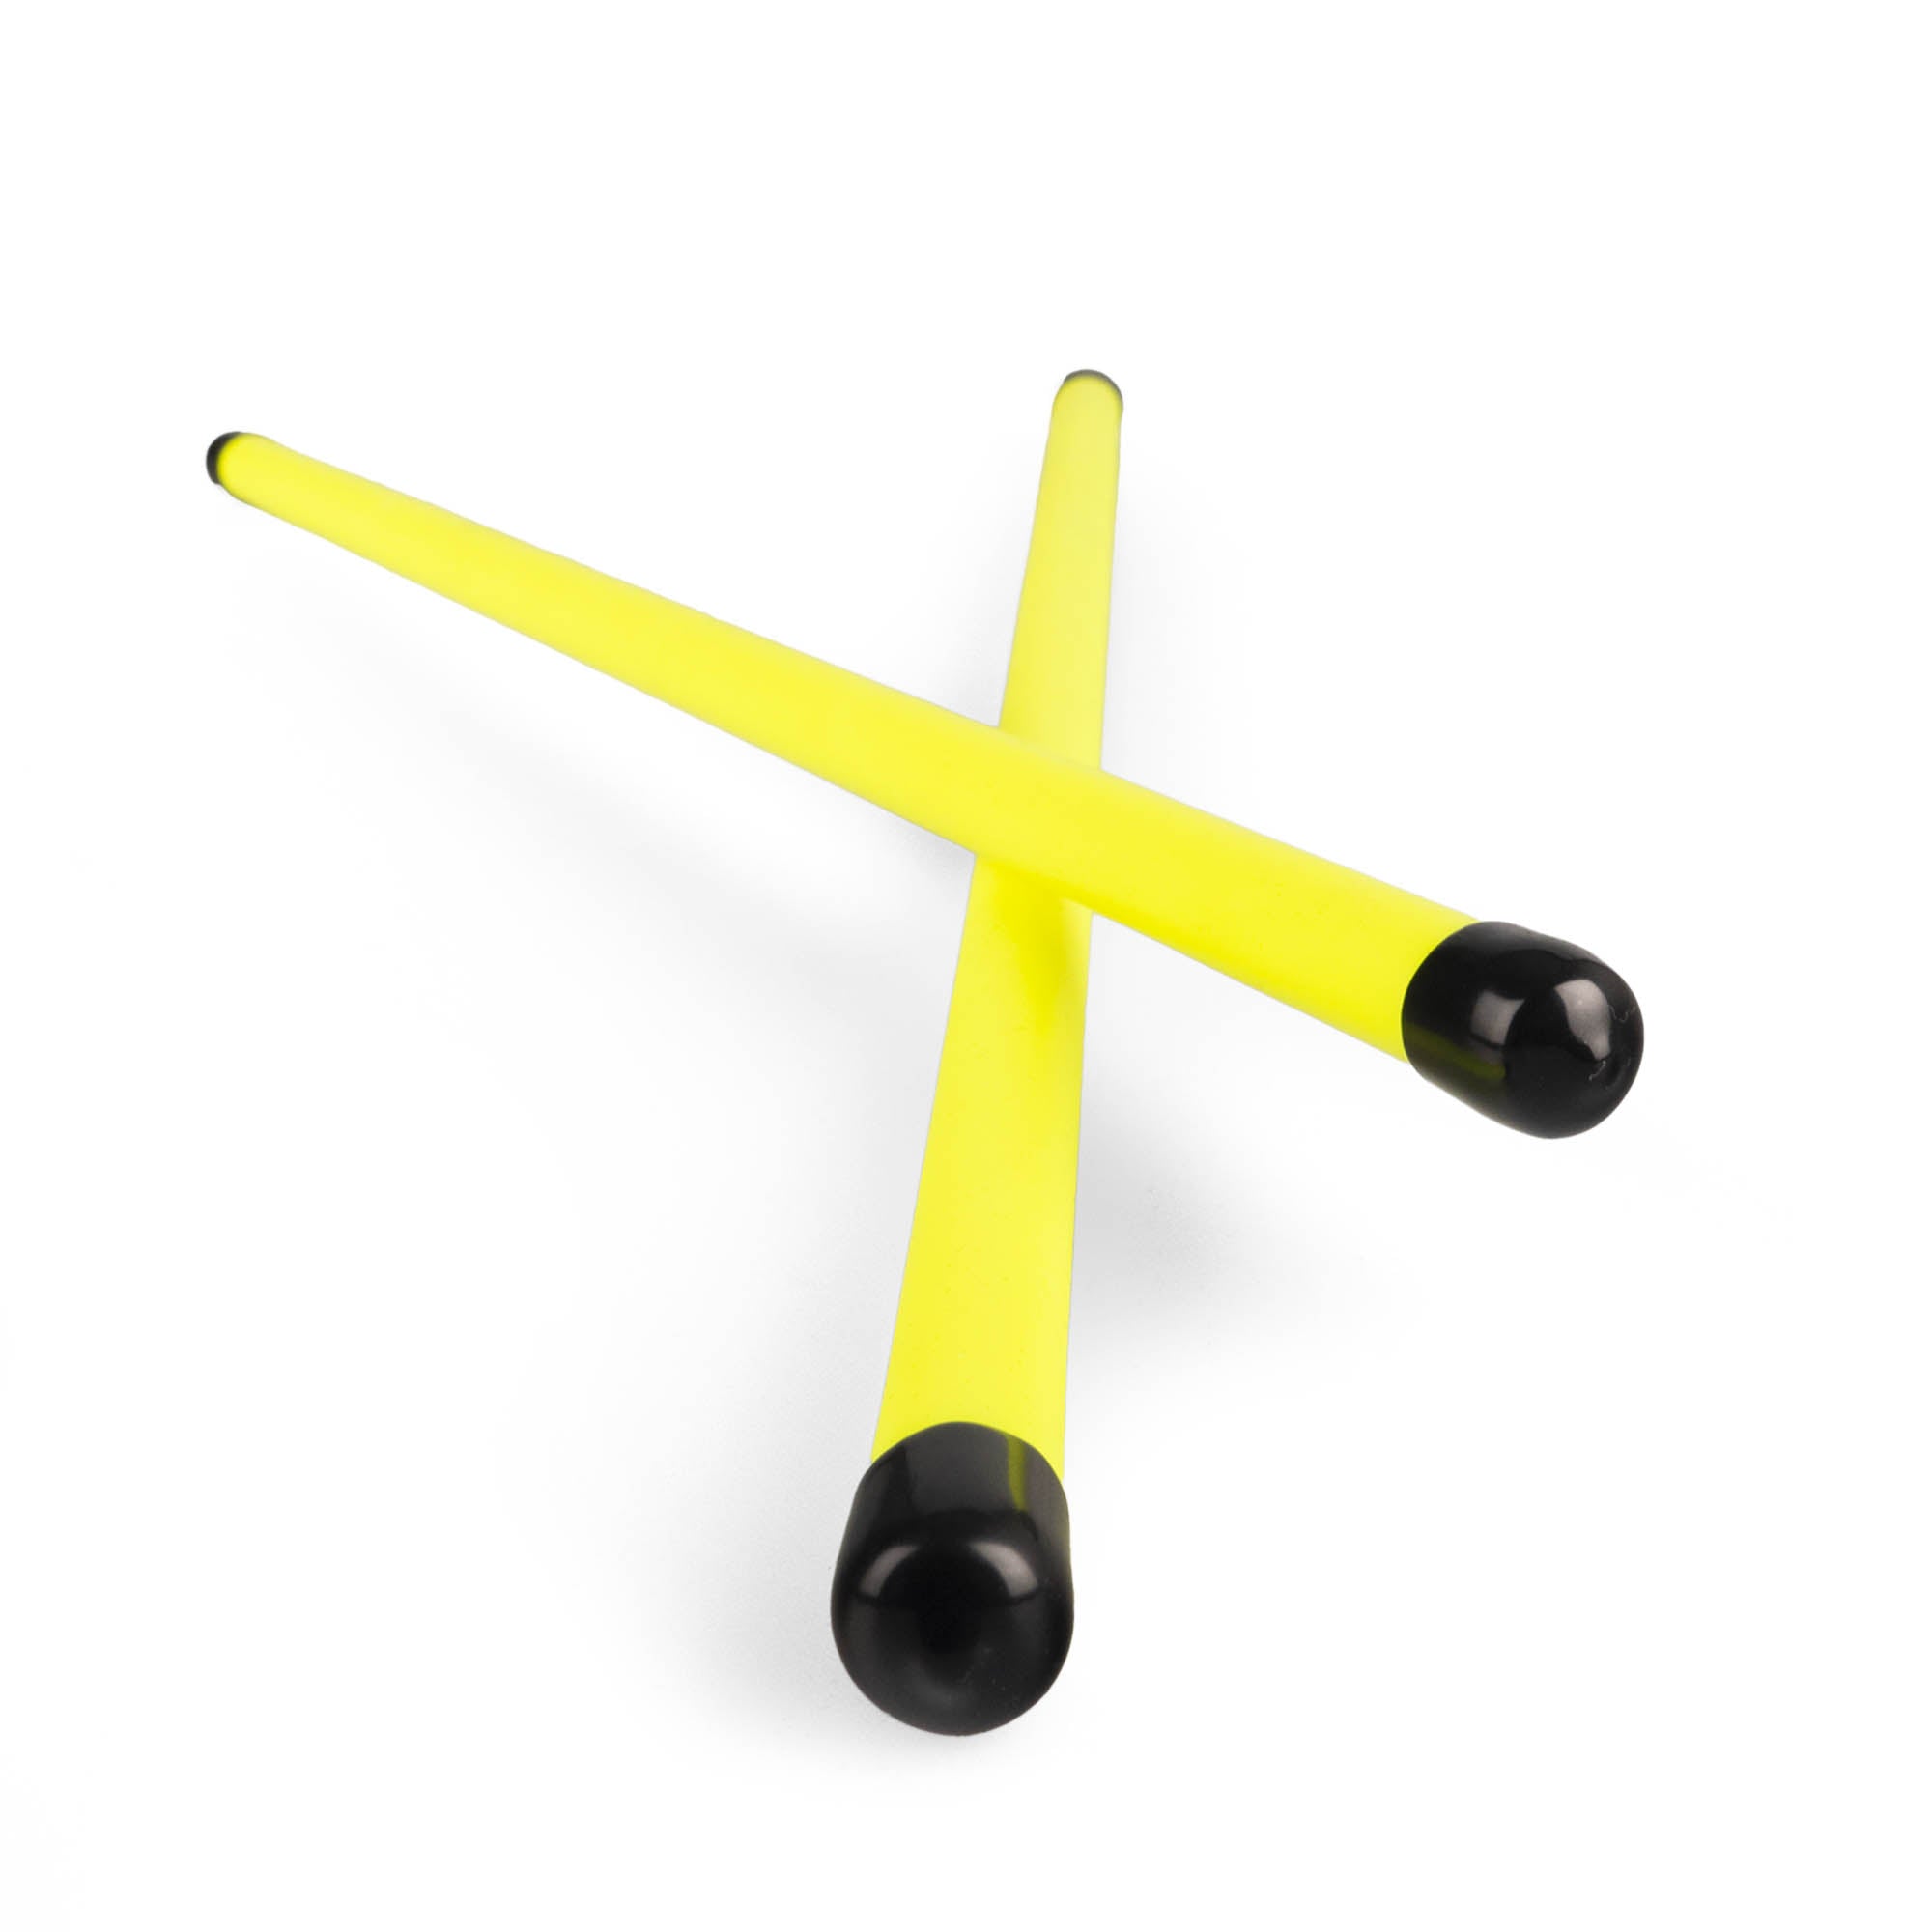 A pair of UV yellow devilstick handsticks crossed over